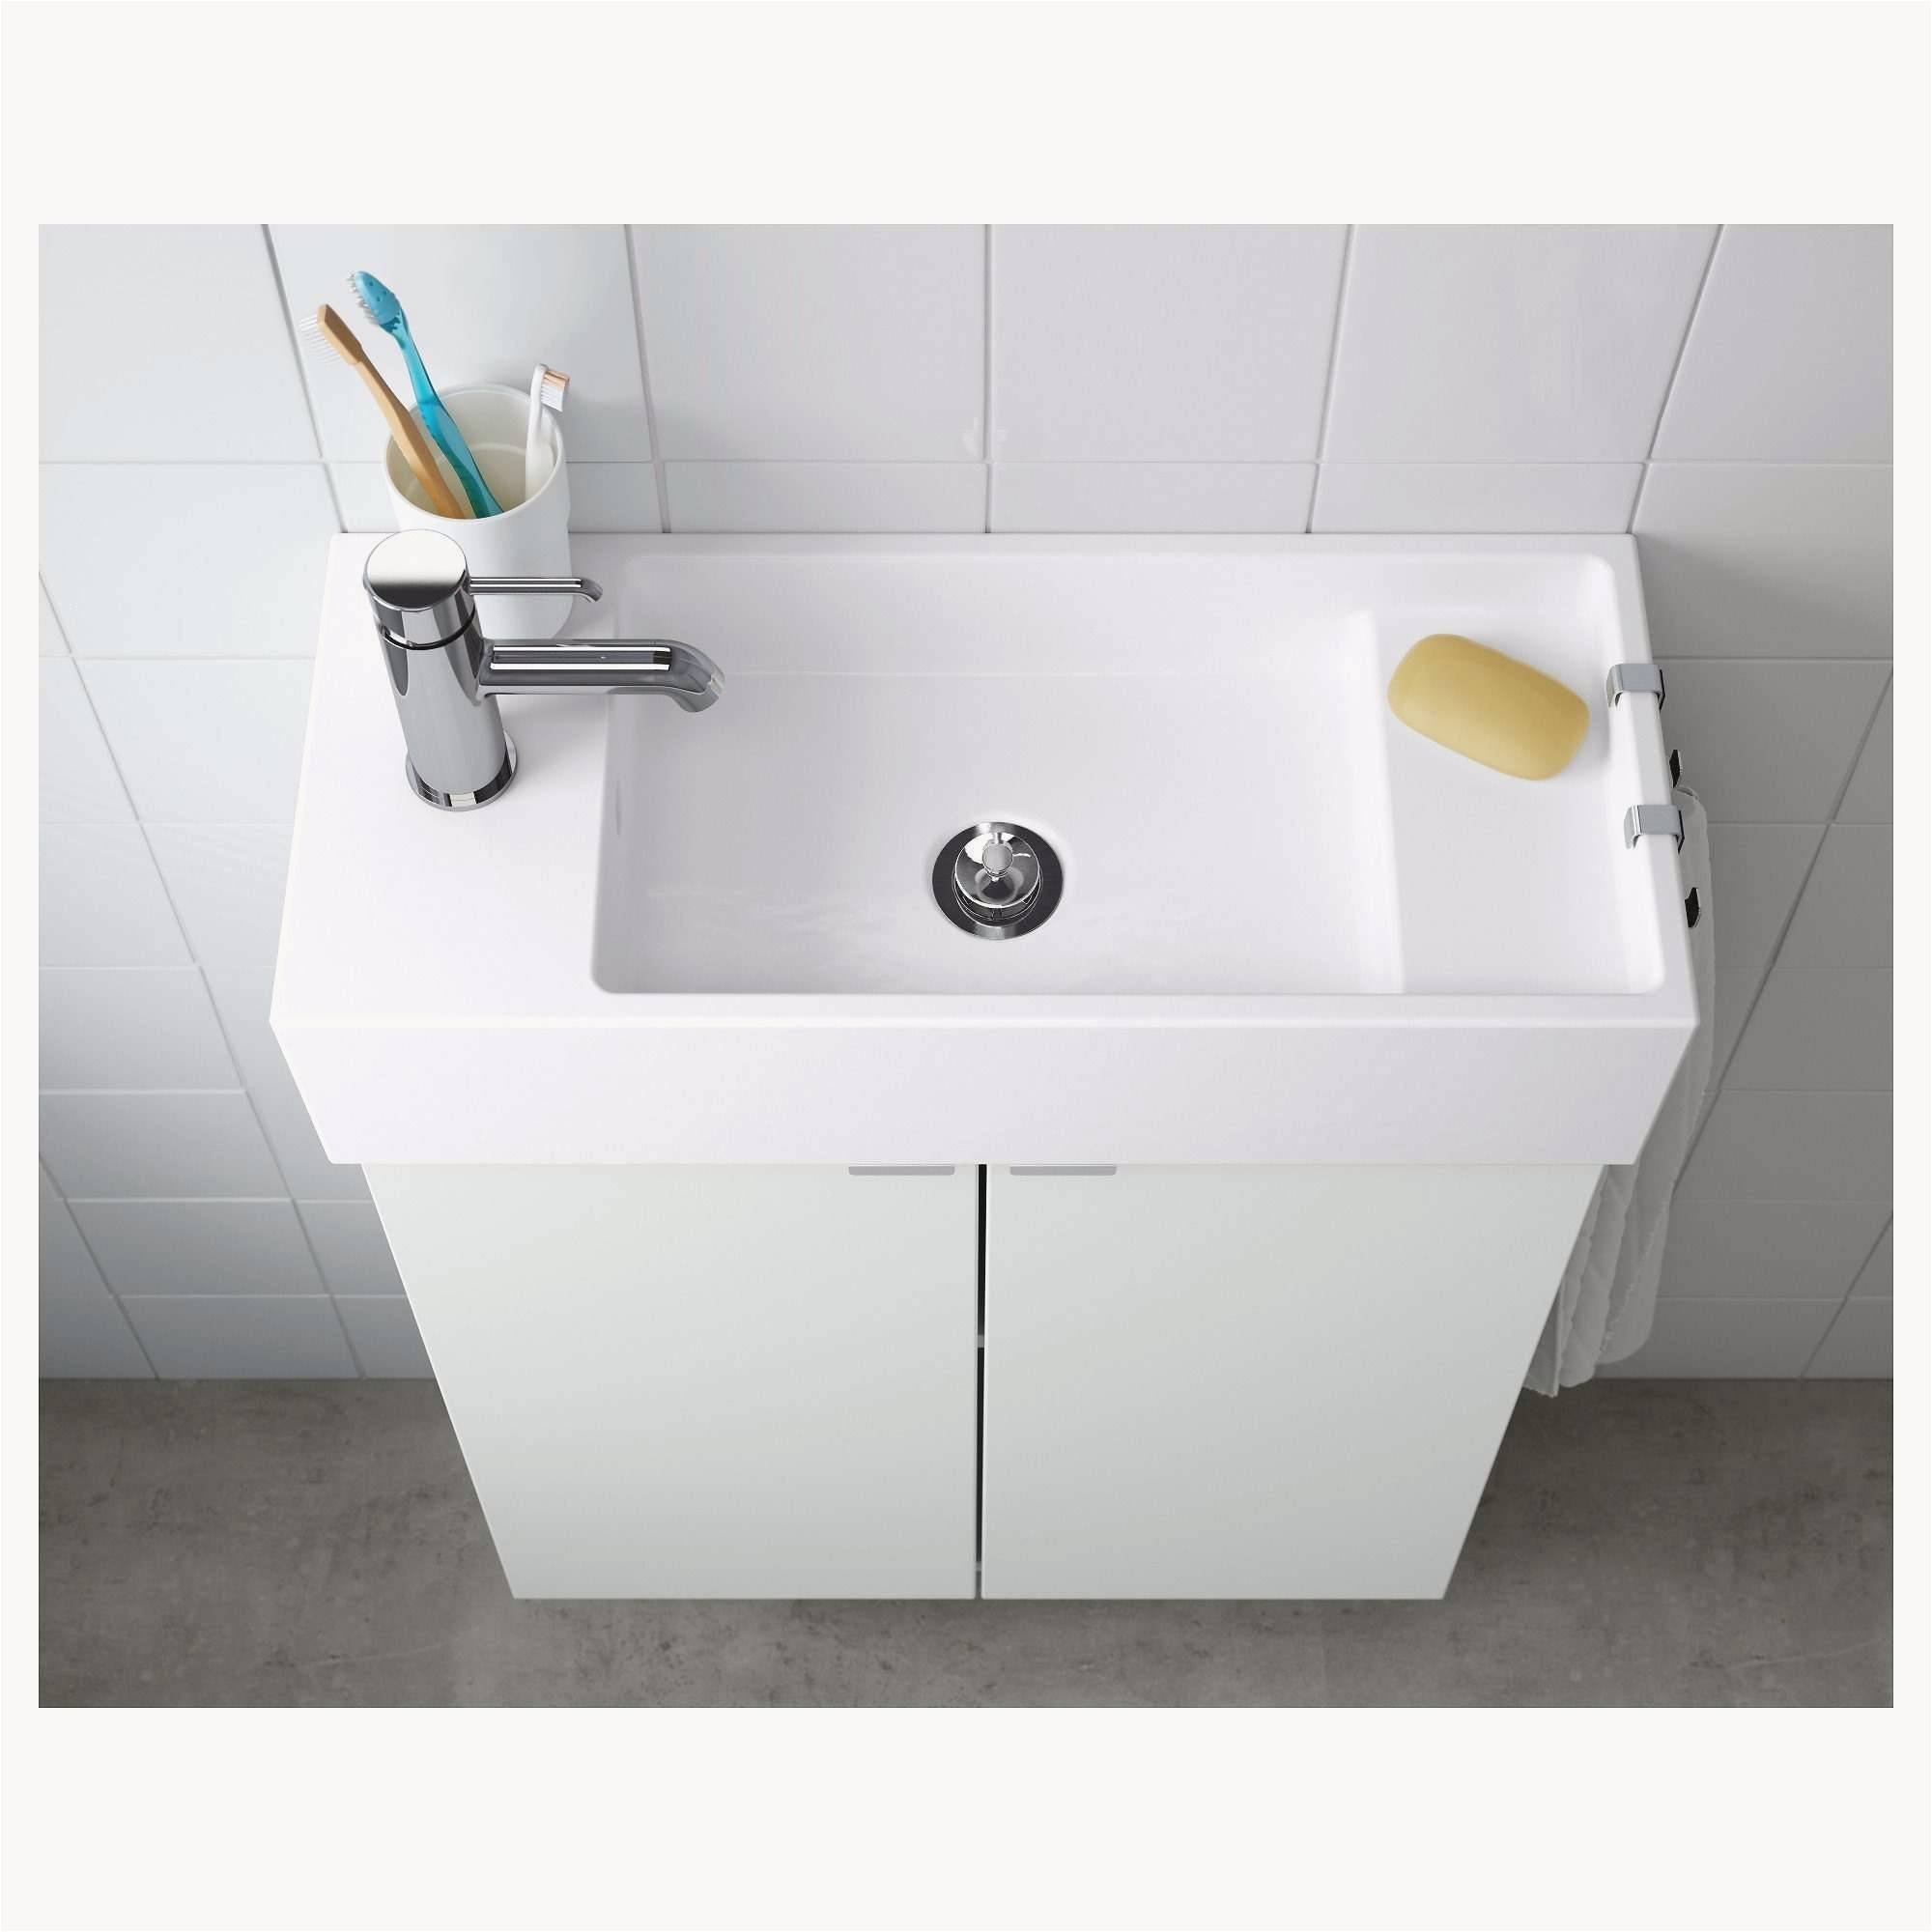 Cheap Small Bathroom Sinks Fresh Pe S5h Sink Ikea Small I 0d Awesome Design Ideas